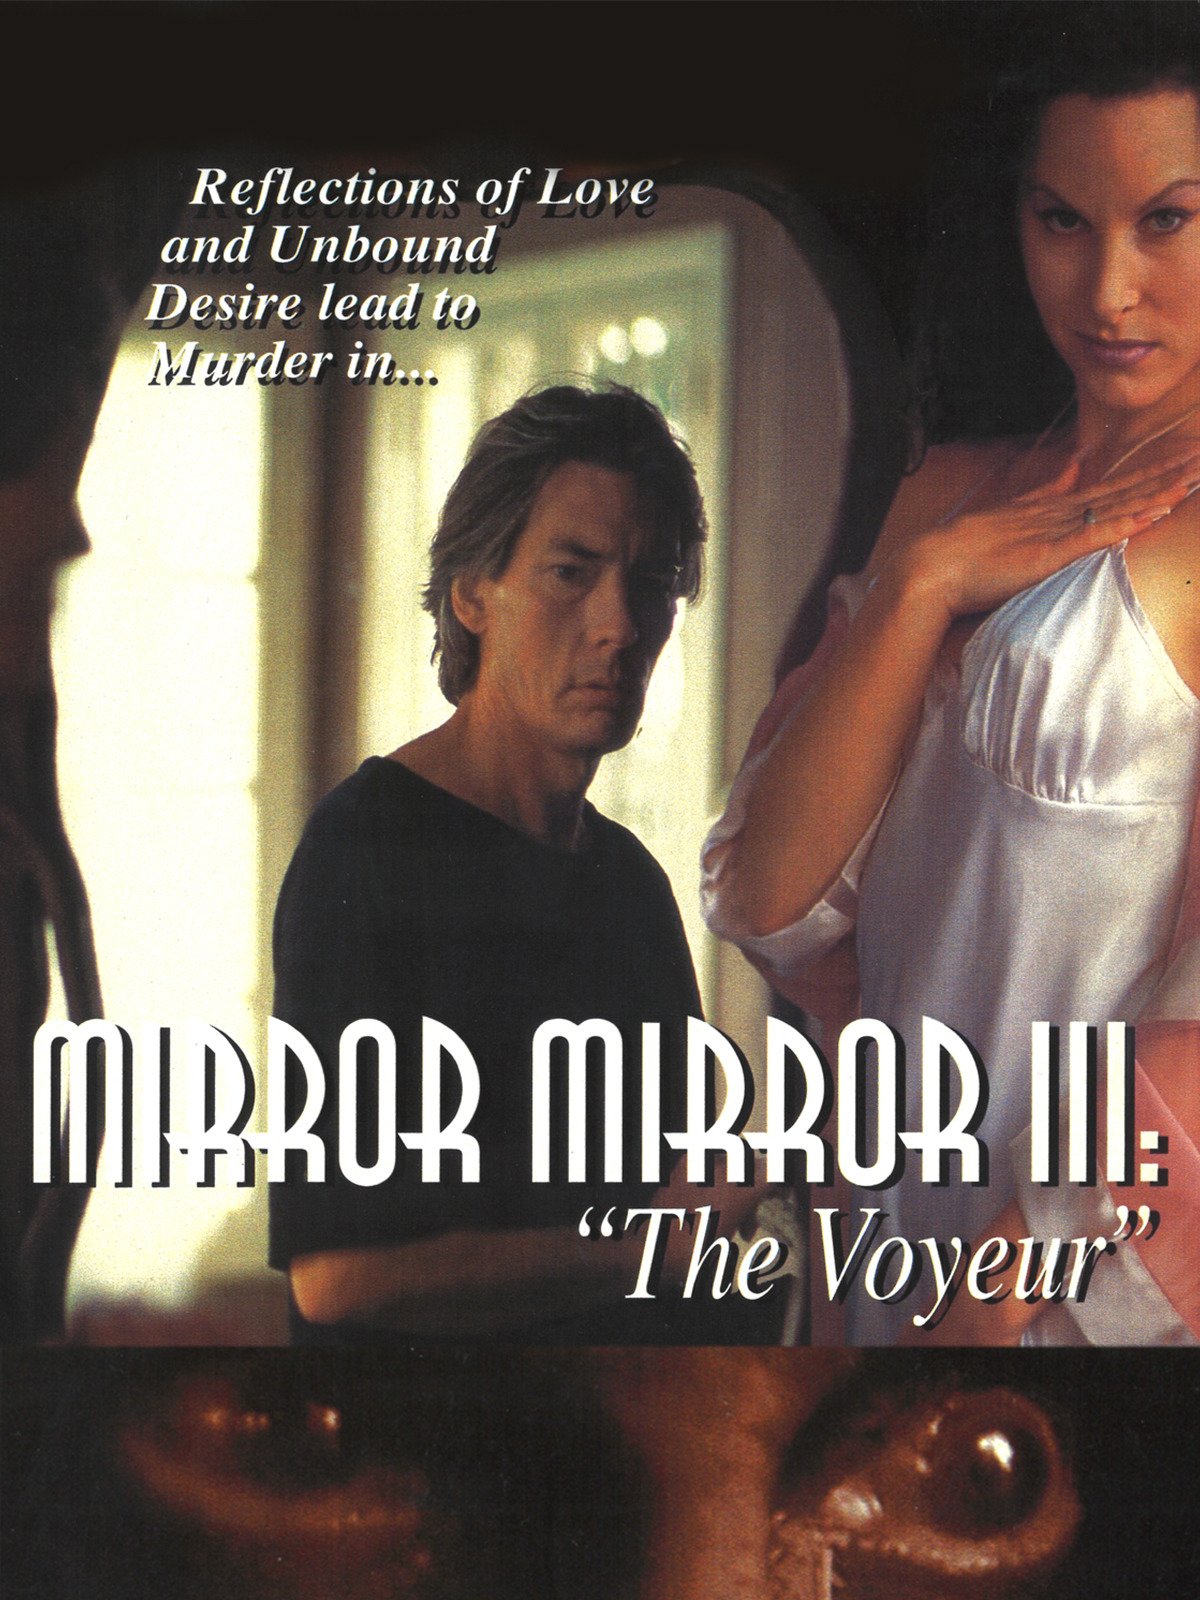 mirror mirror iii the voyeur Adult Pictures